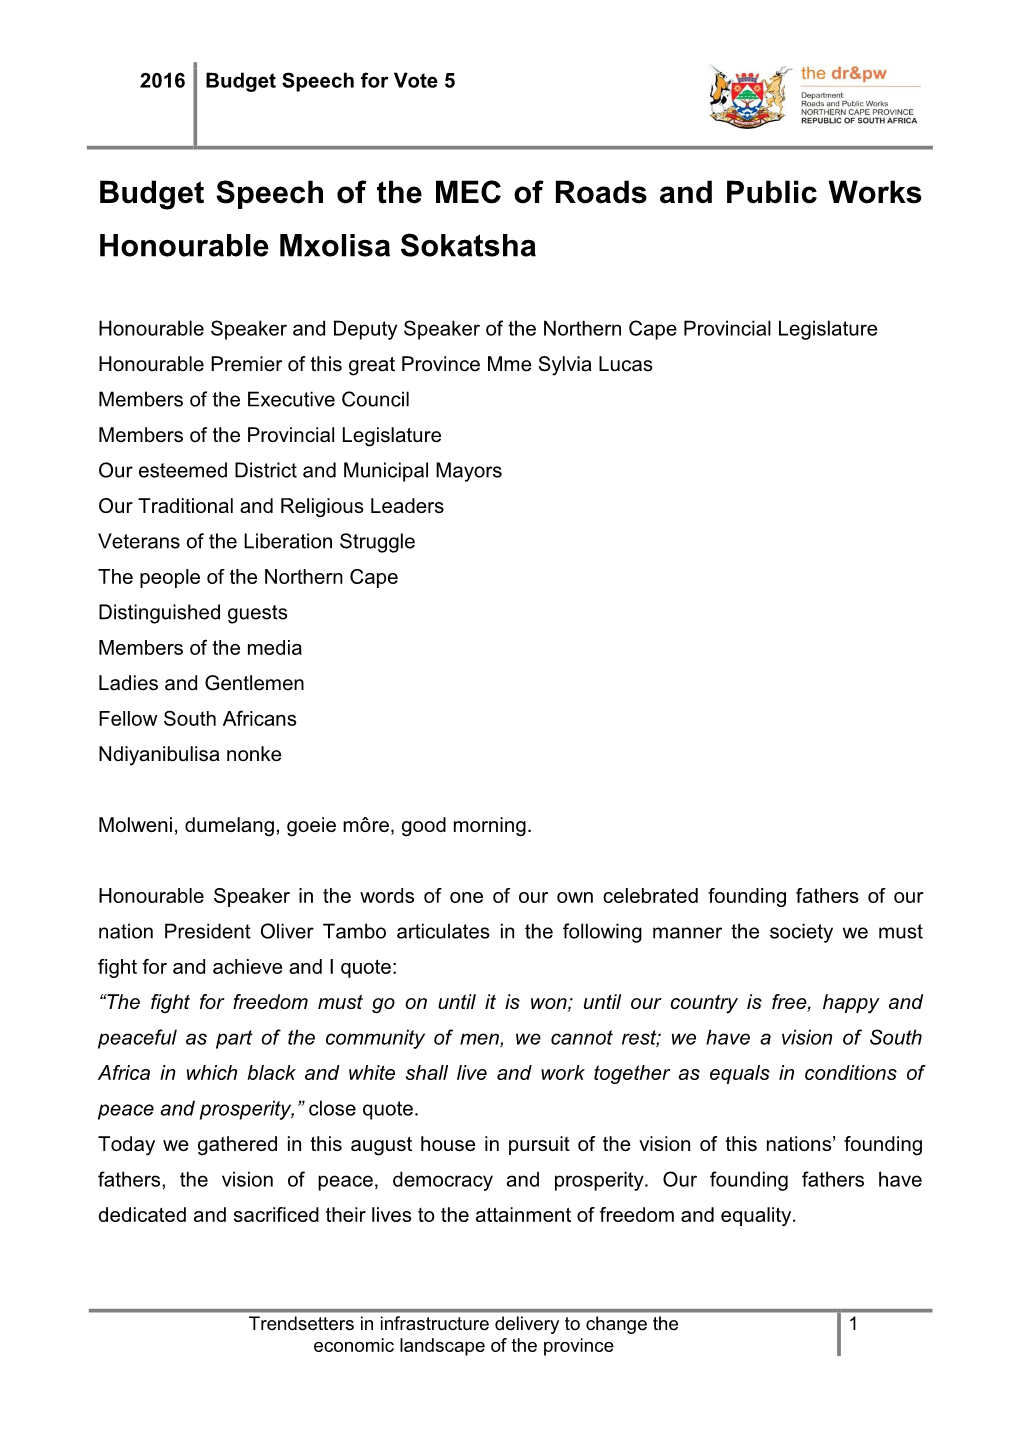 Budget Speech of the MEC of Roads and Public Works Honourable Mxolisa Sokatsha